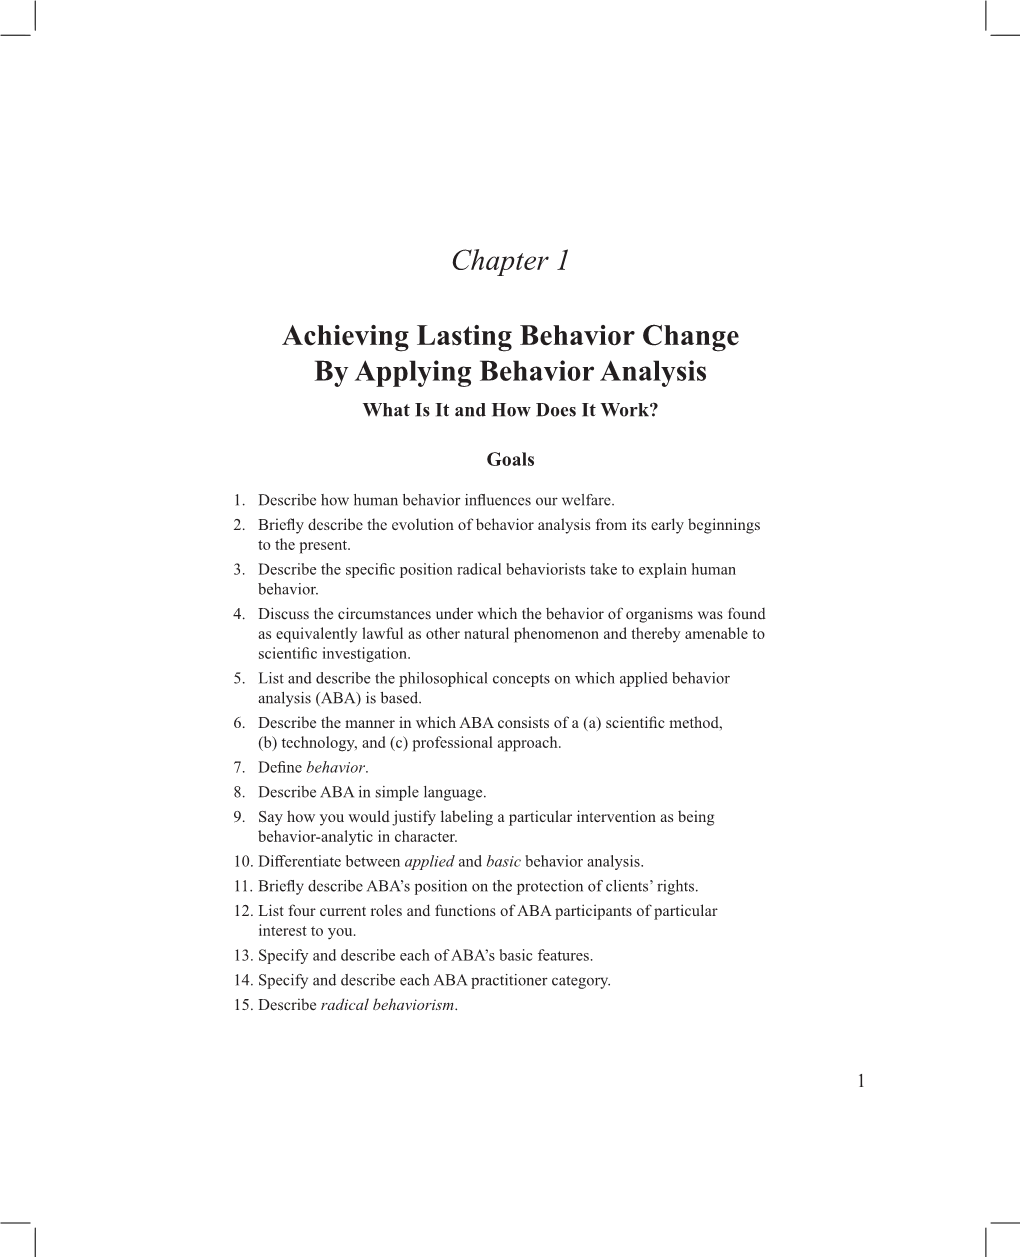 Chapter 1 Achieving Lasting Behavior Change by Applying Behavior